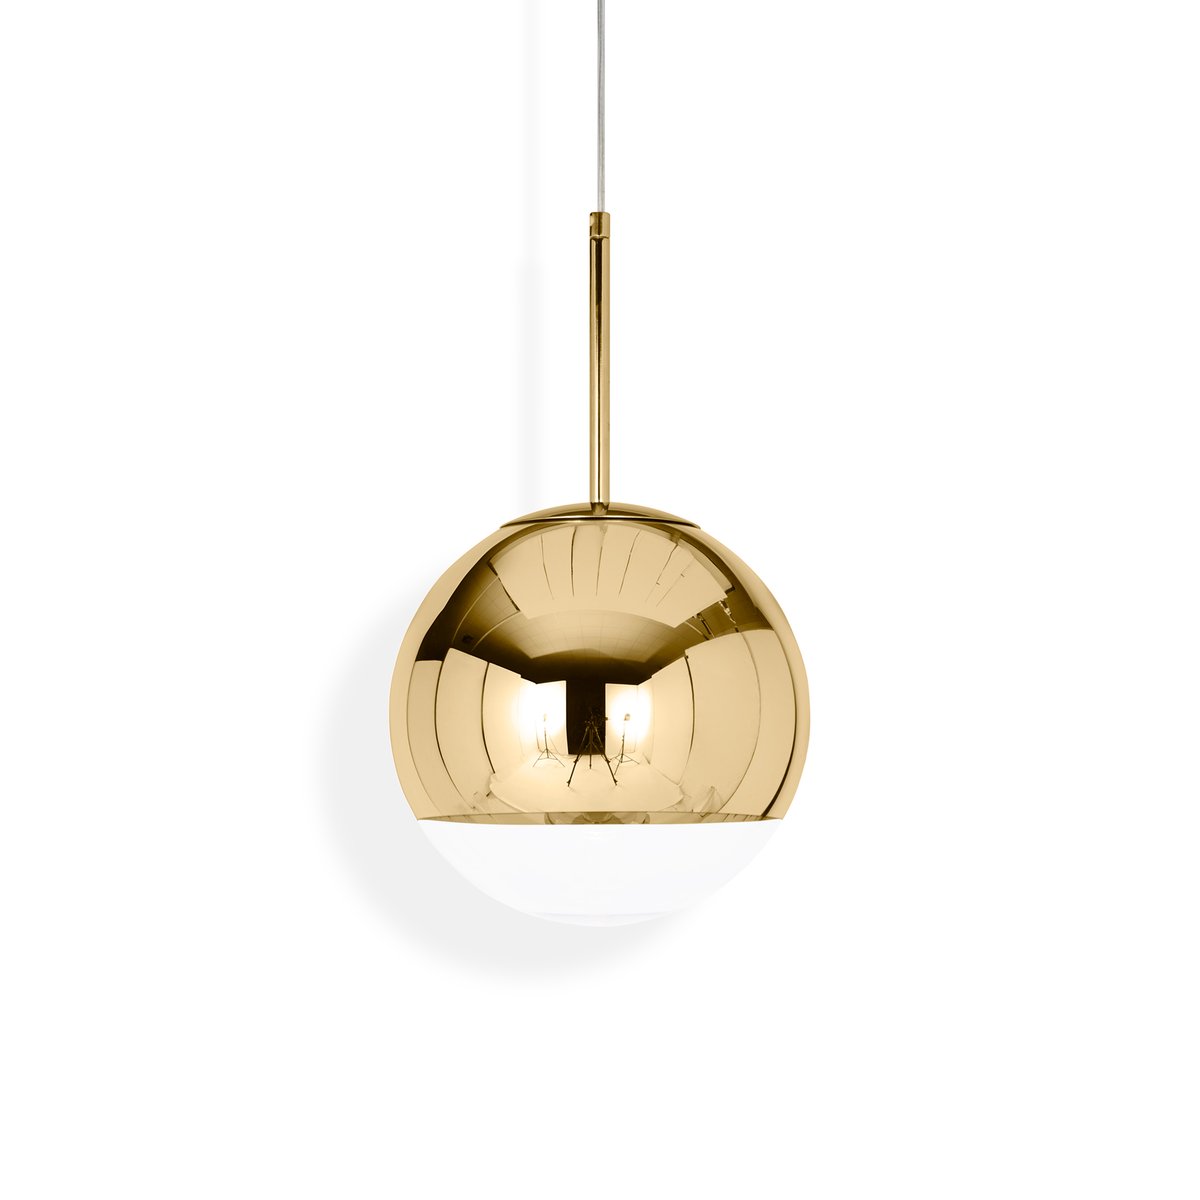 Tom Dixon Mirror Ball hanglamp LED Ø25 cm Gold